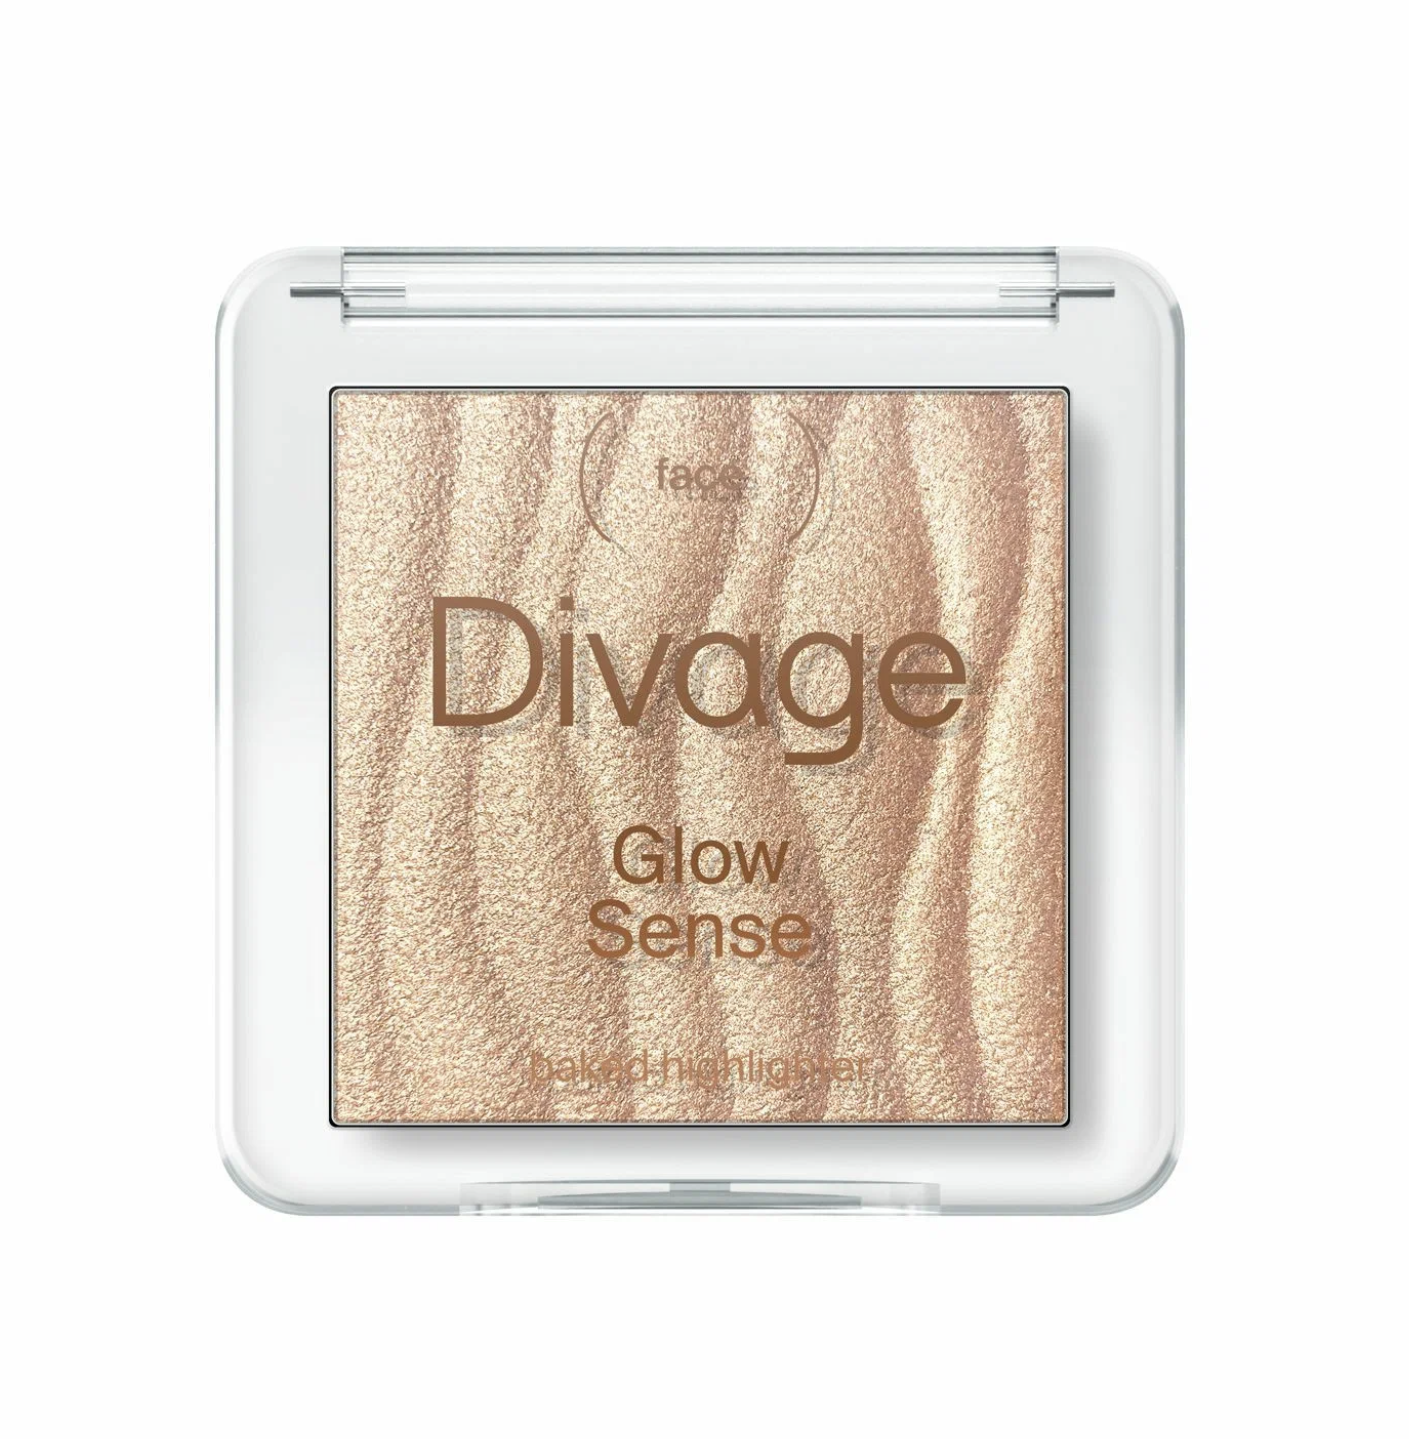   / Divage -     Glow Sense Baked Highlighter  03, 5,5 